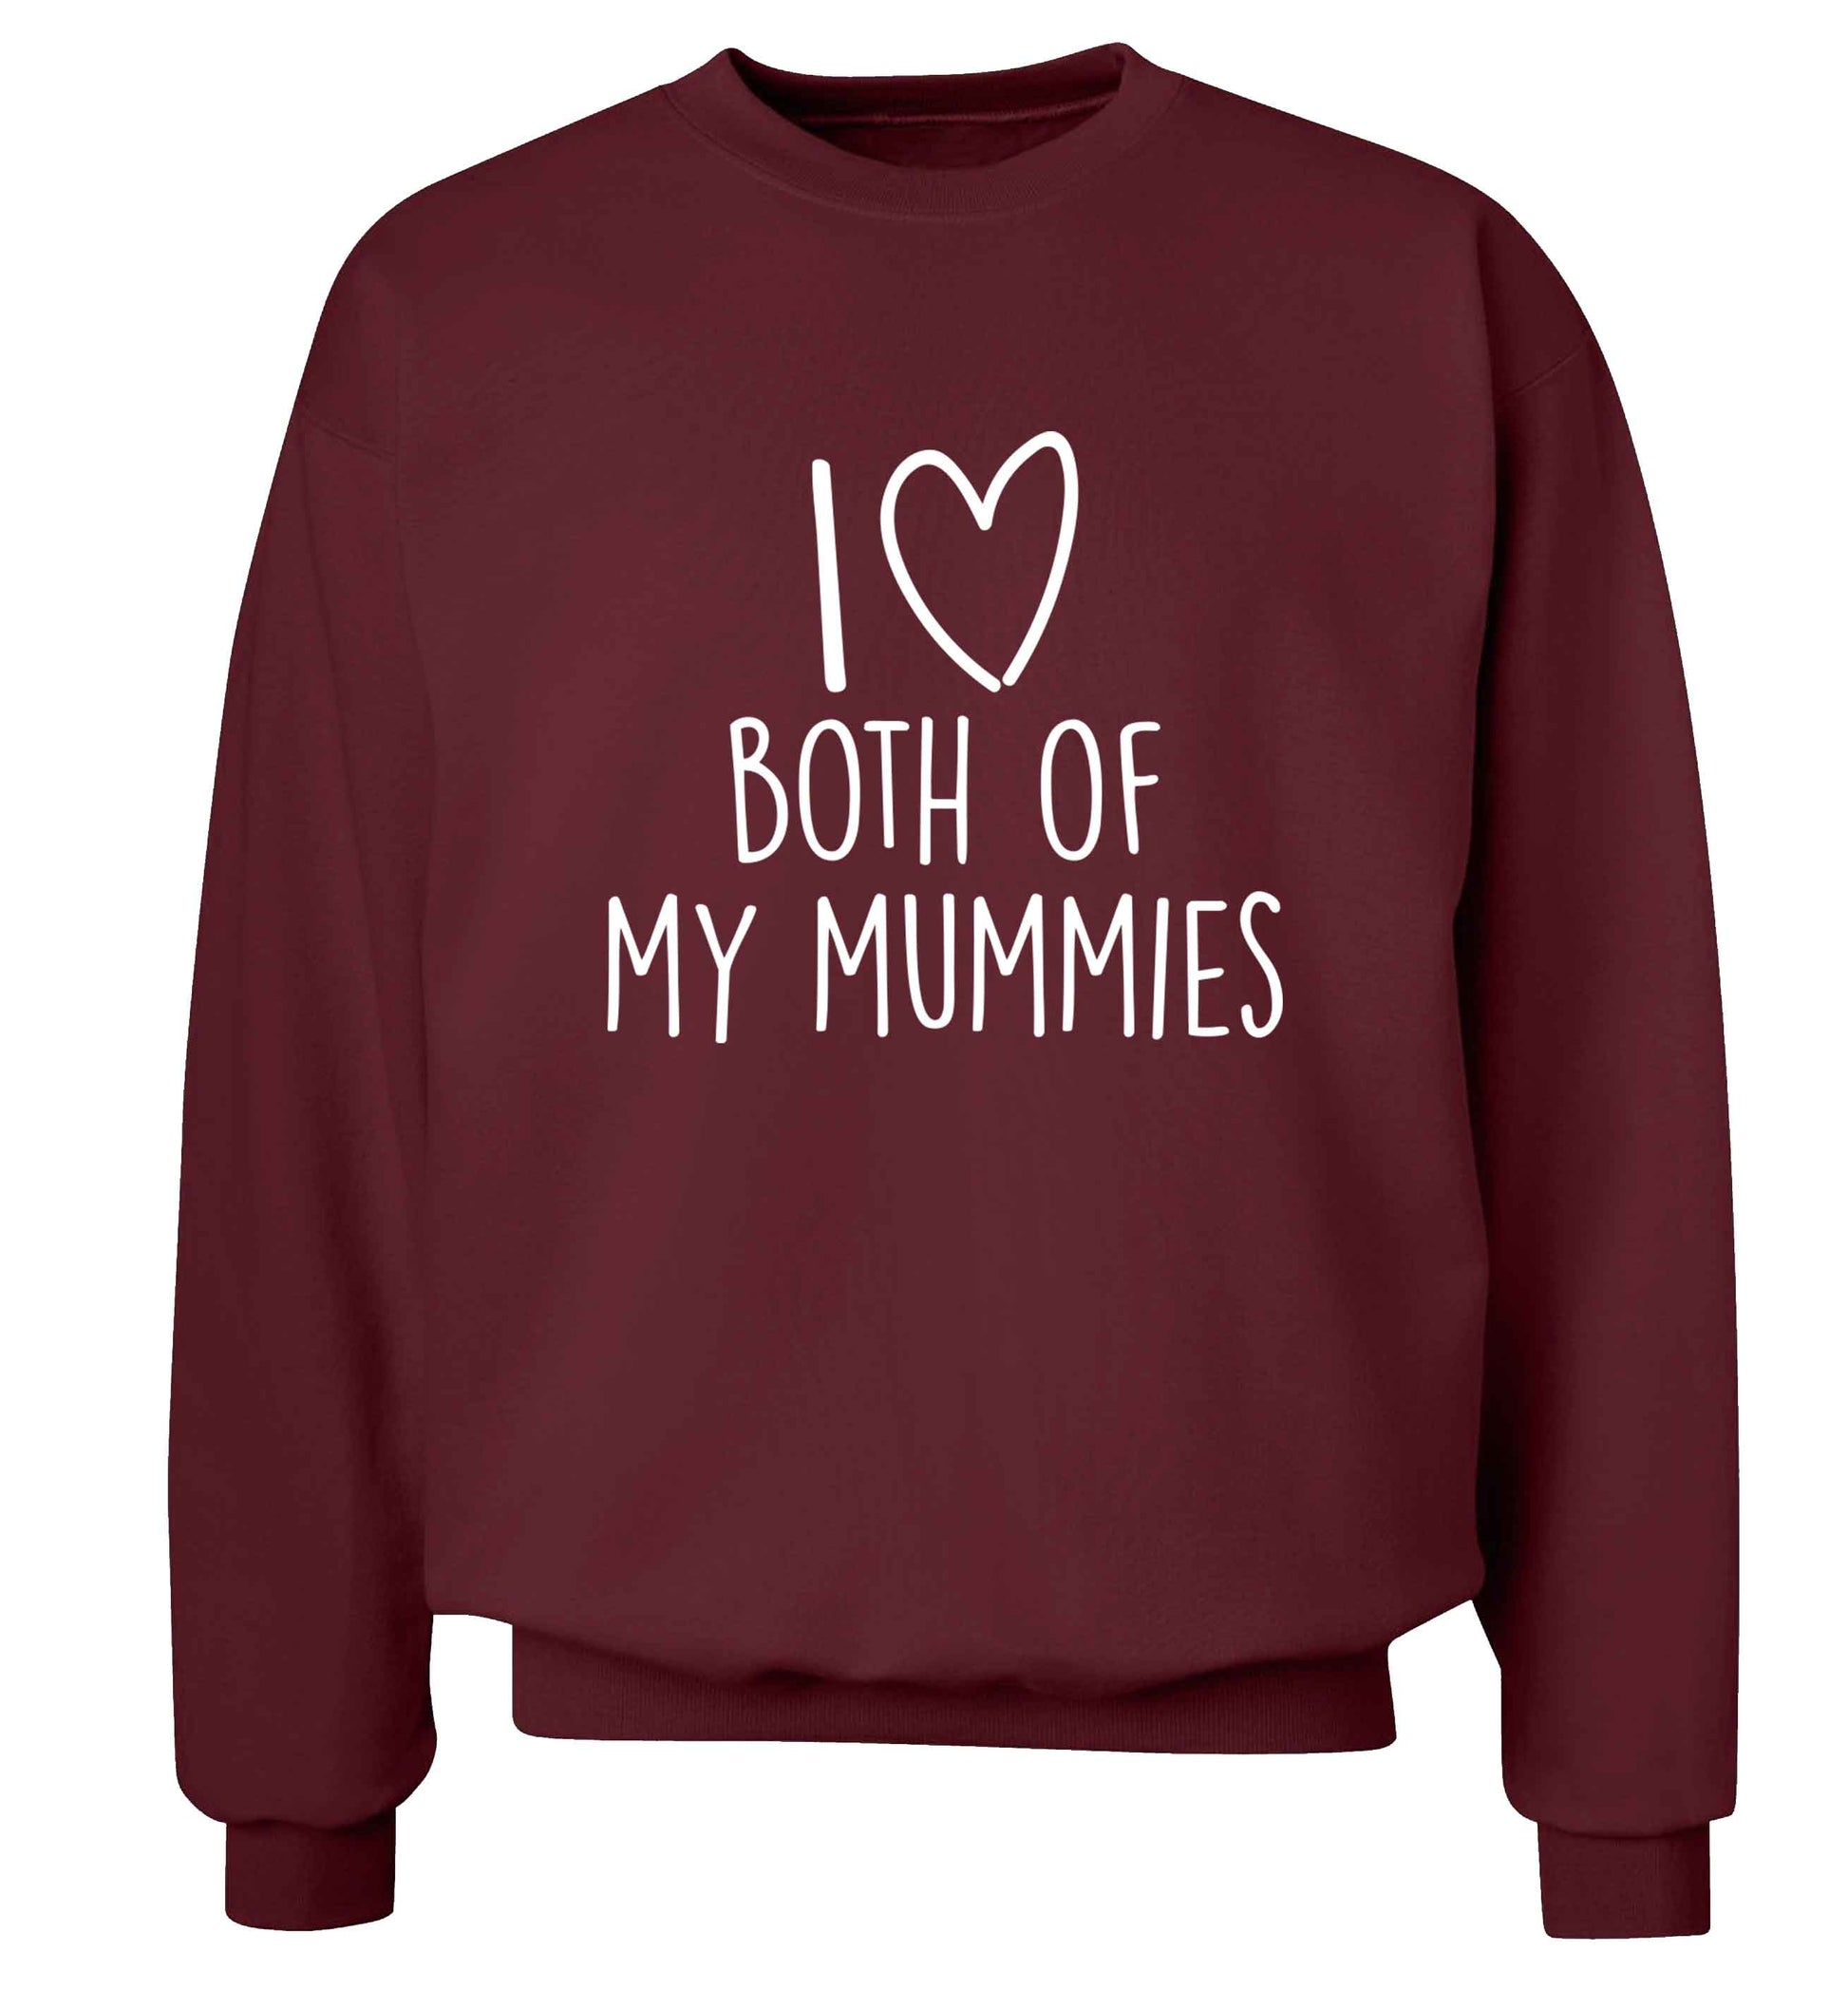 I love both of my mummies adult's unisex maroon sweater 2XL